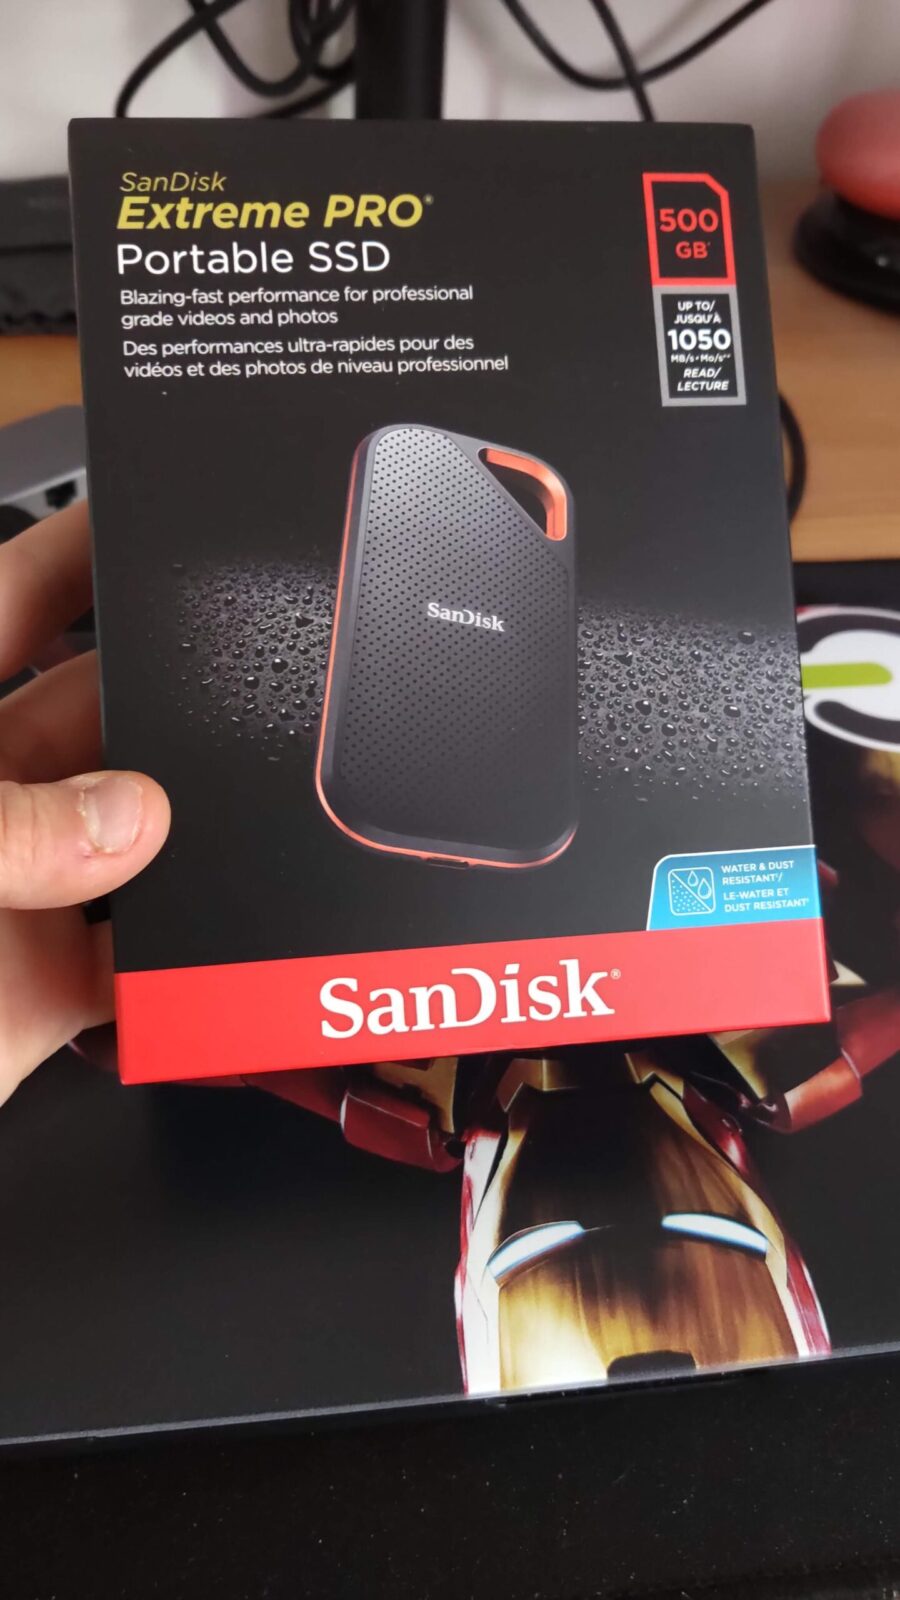 SanDisk Extreme PRO SSD (500 GB)